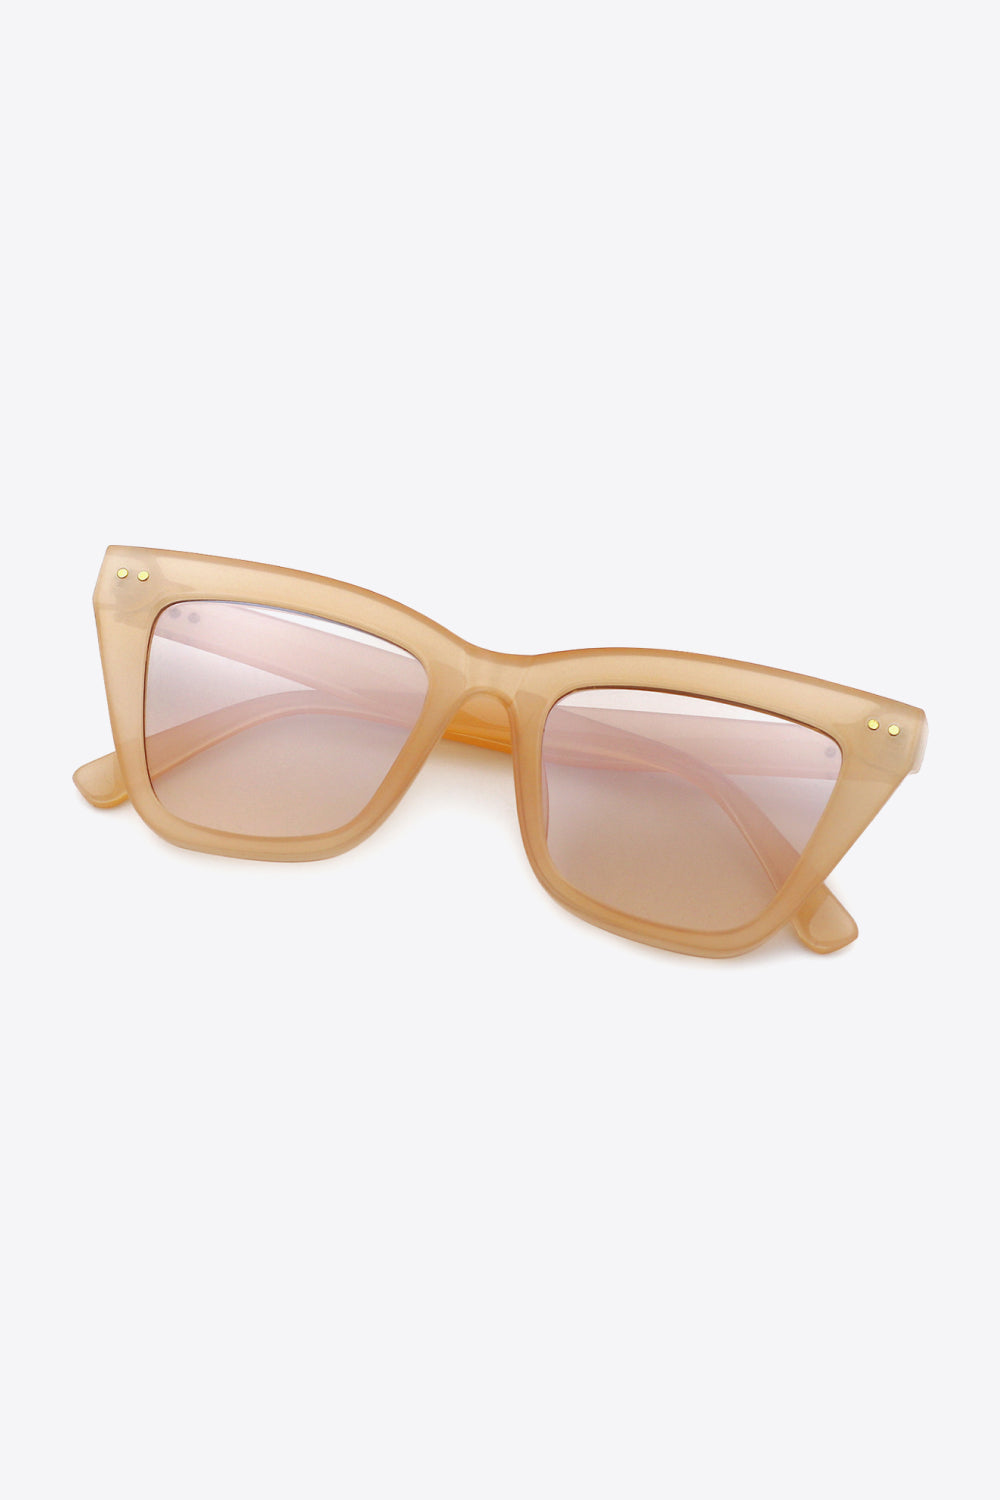 Charm School Wayfarer UV400 Sunglasses in Apricot and Tortoiseshell